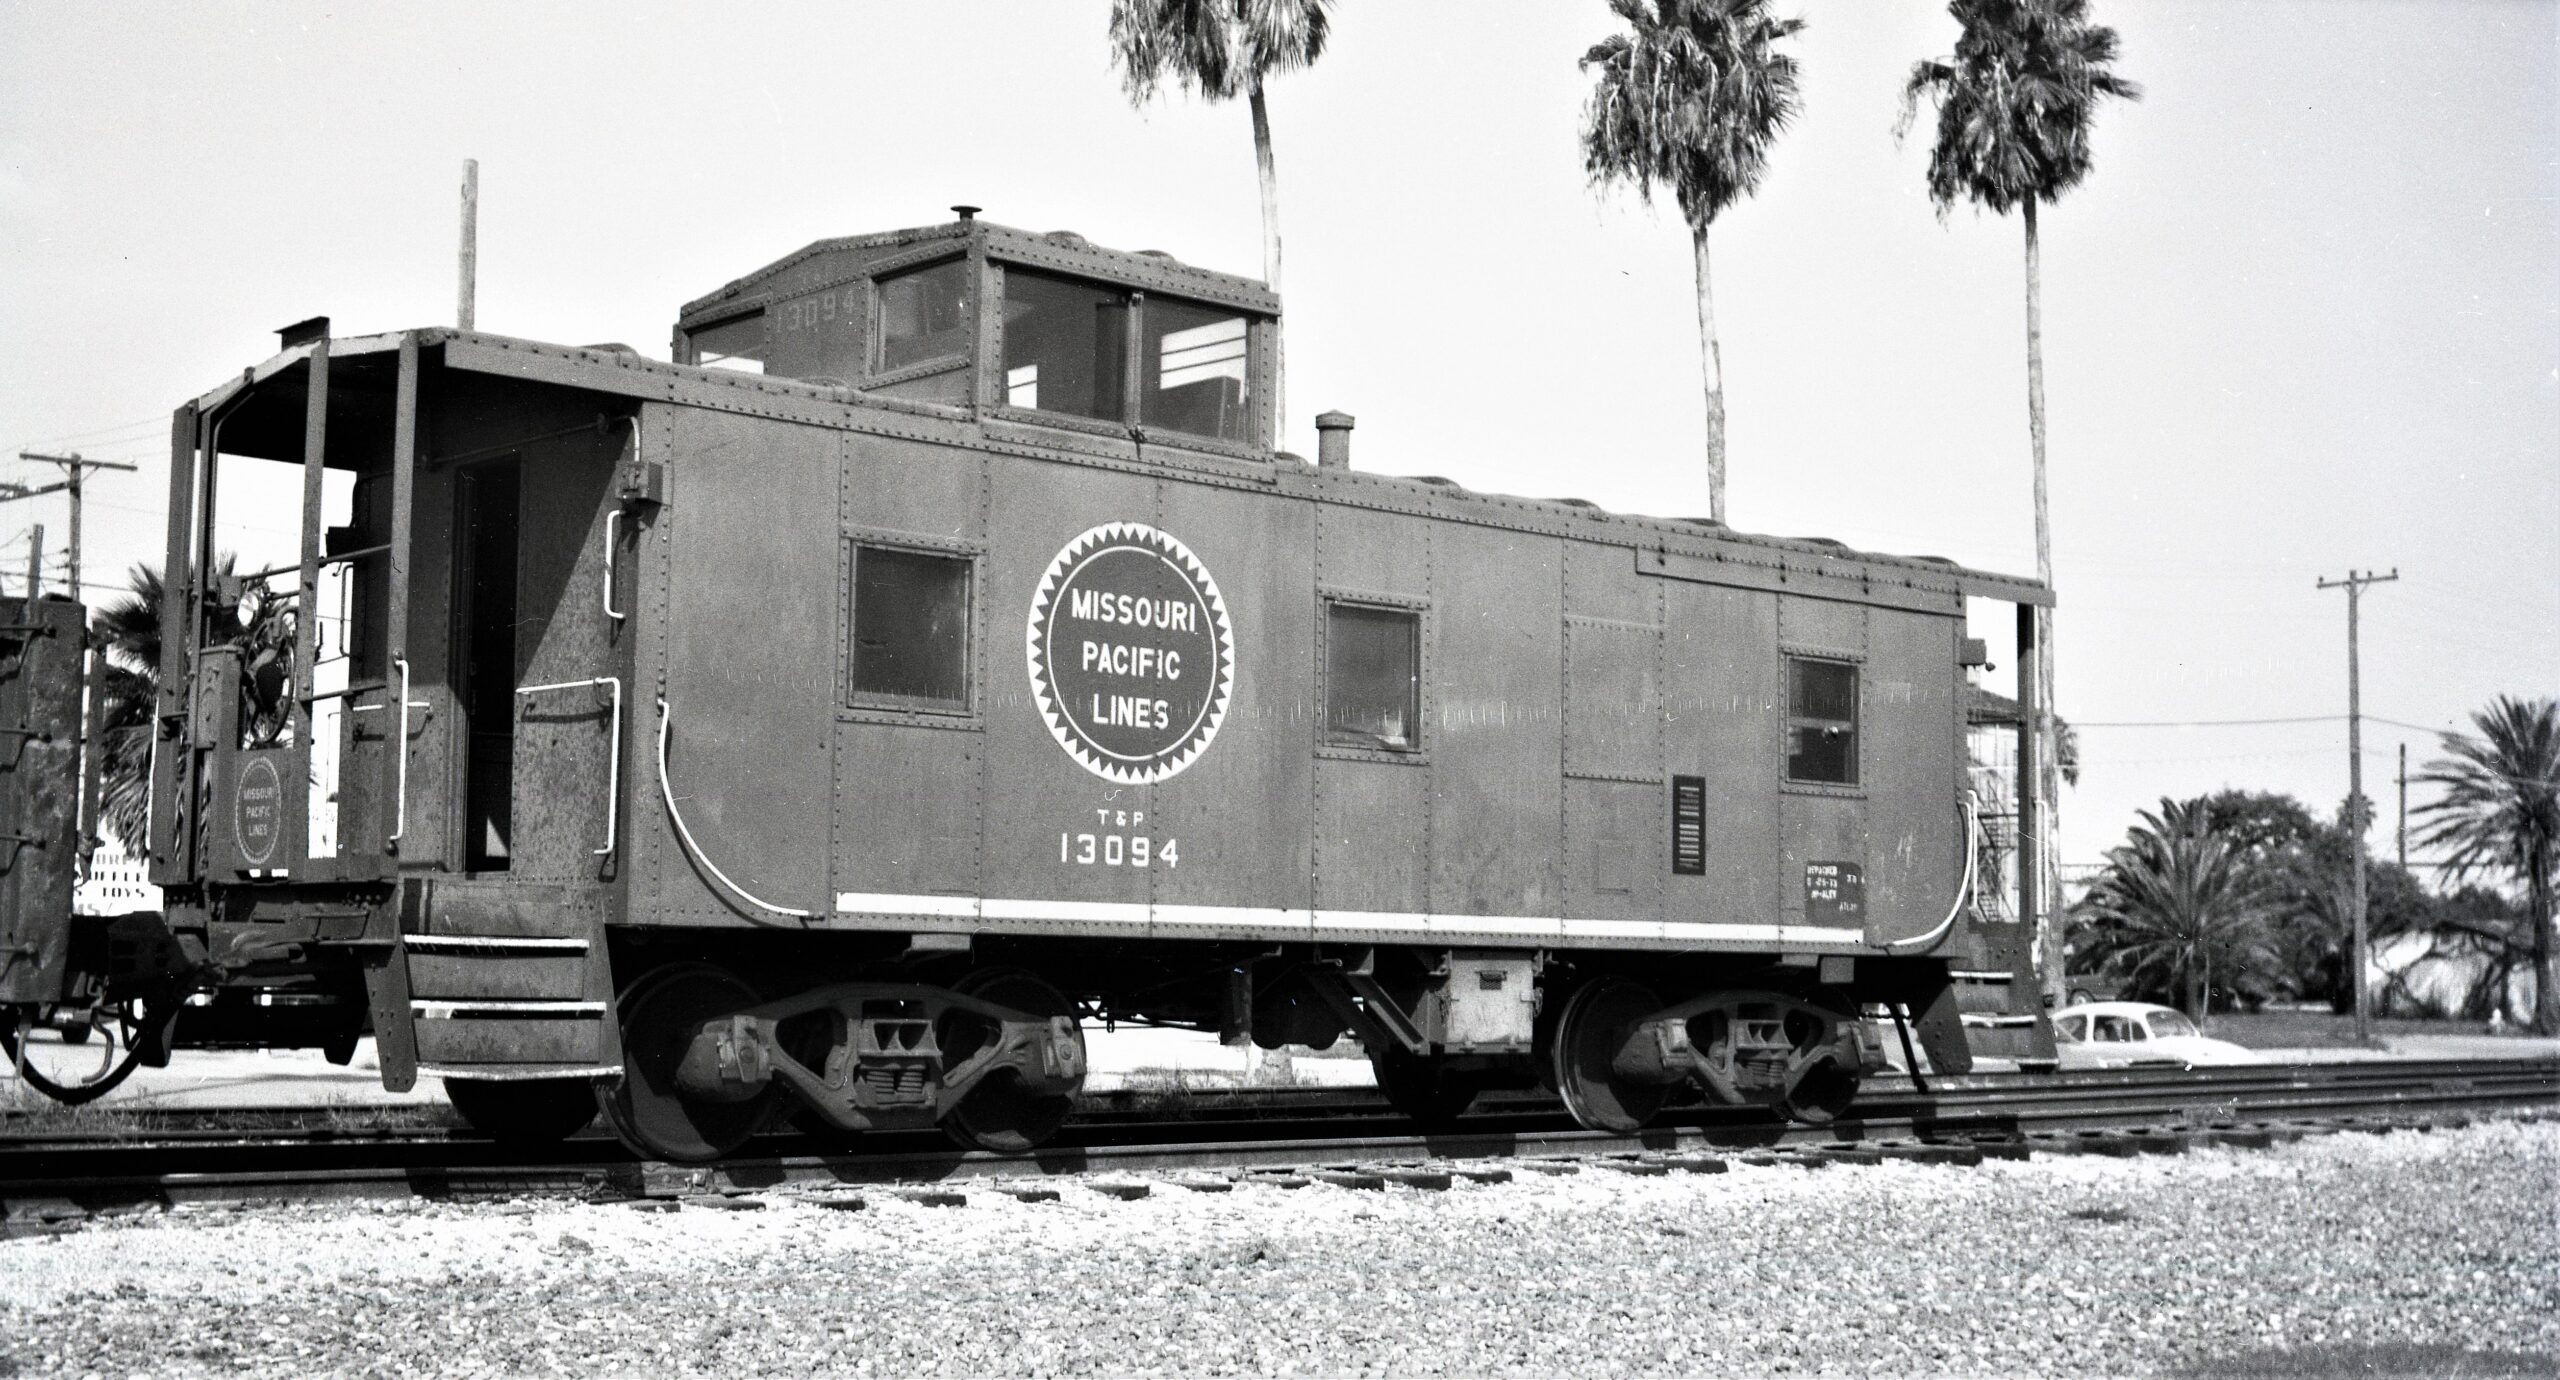 Missouri Pacific | ex Texas and Pacific | San Benito, Texas | Caboose #13094 | December 1948 |Baldwin Locomotive Works photograph | Elmer Kremkow Collection